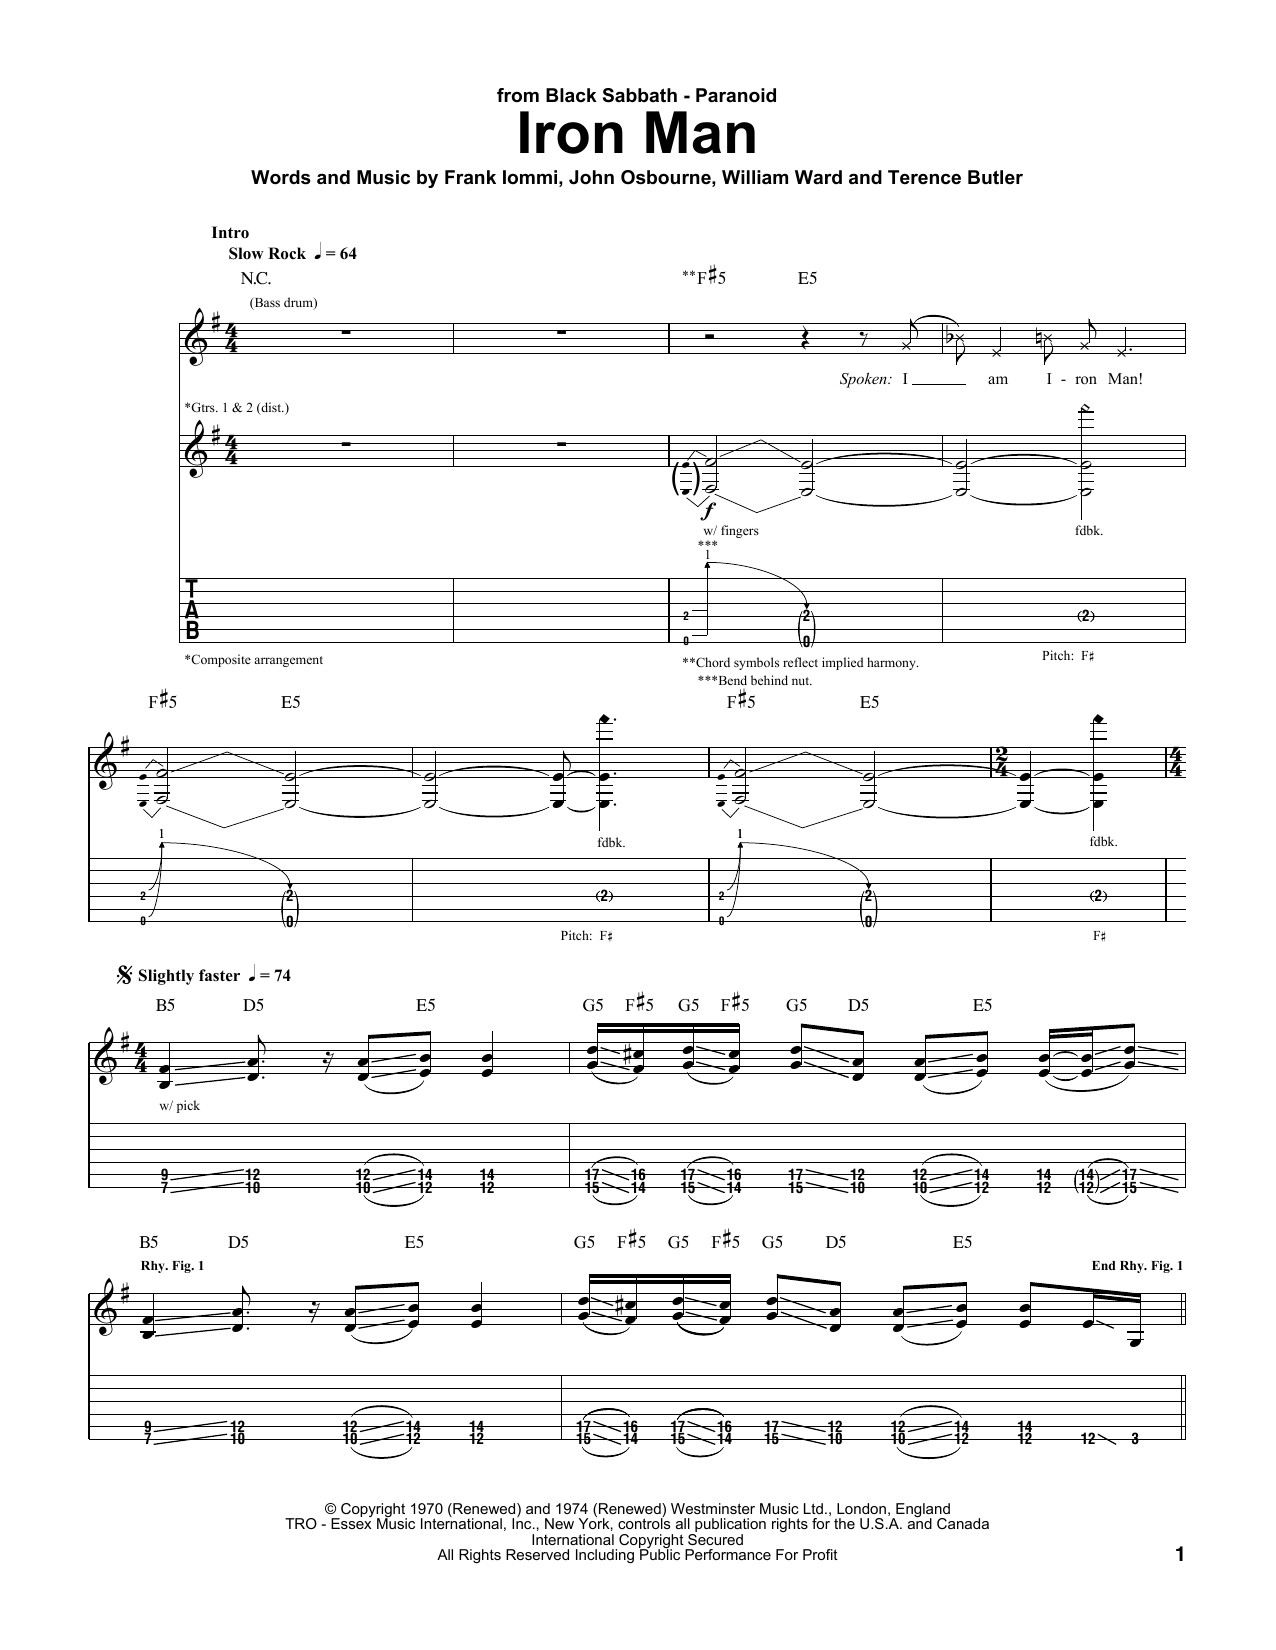 Black Sabbath Iron Man Sheet Music Notes & Chords for Guitar Tab - Download or Print PDF